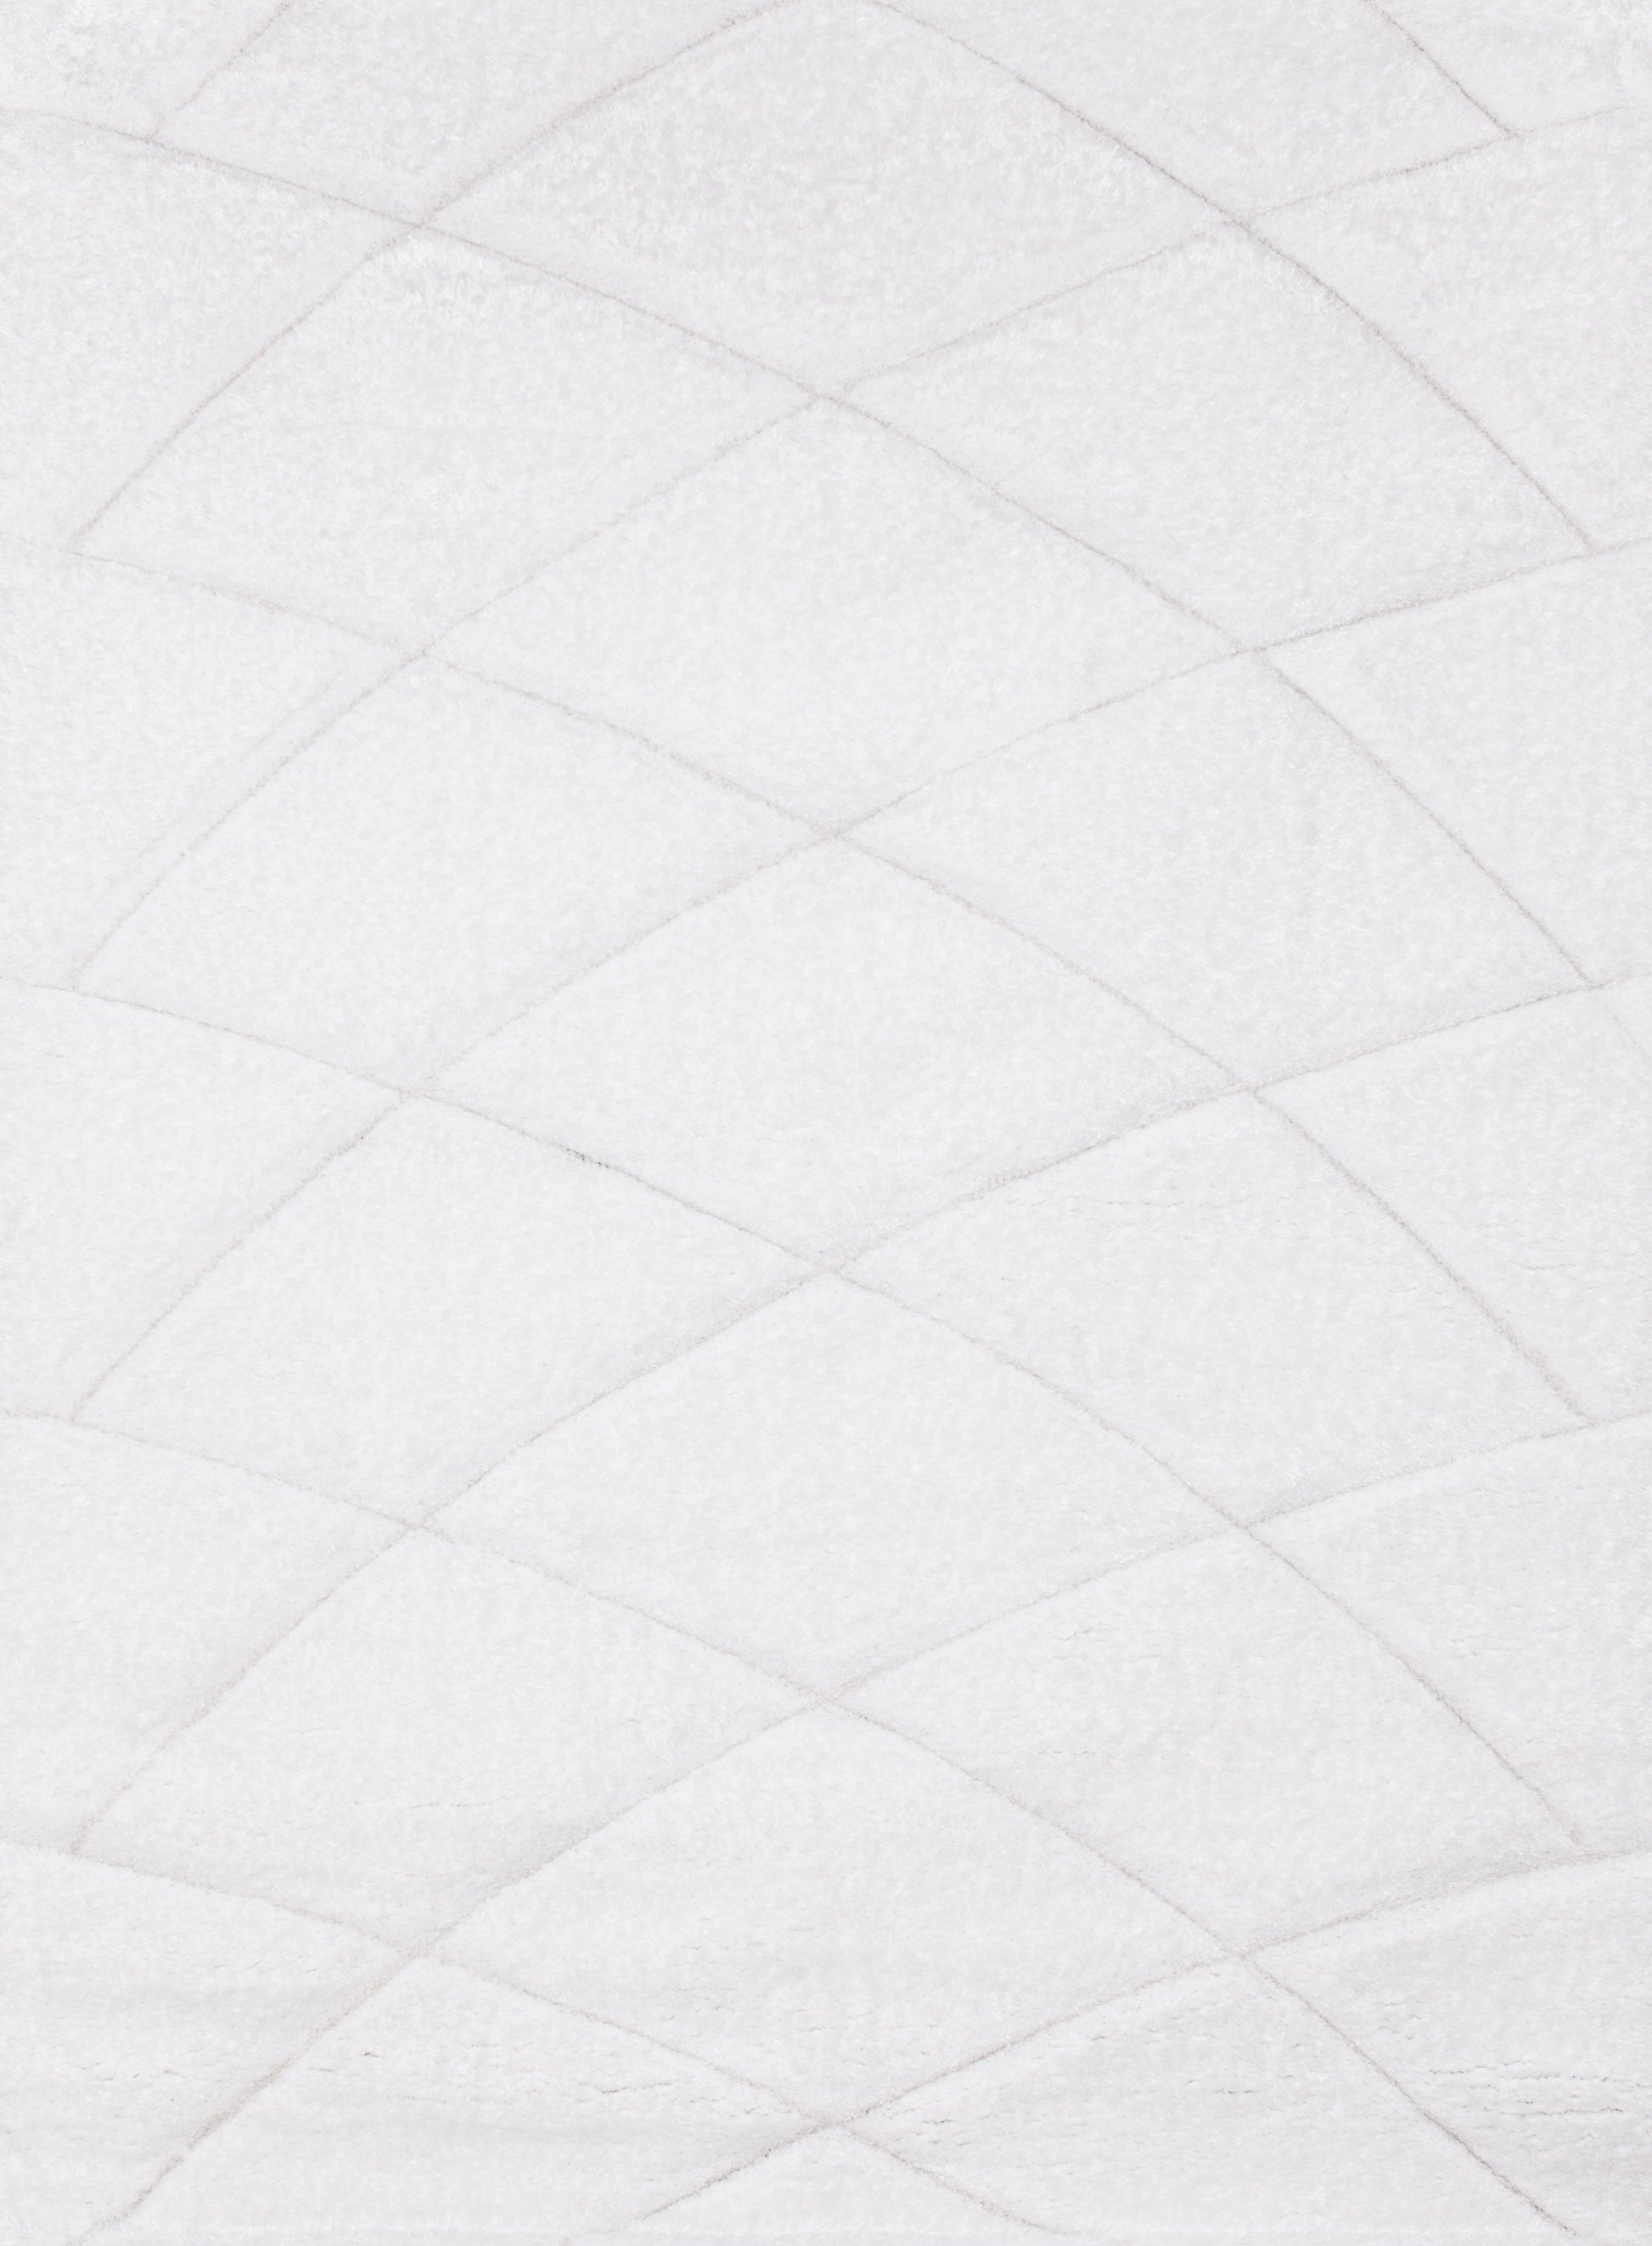 Plush Fluffy Shine 3D Geometric Dimond Shag Area Rug/Carpet White